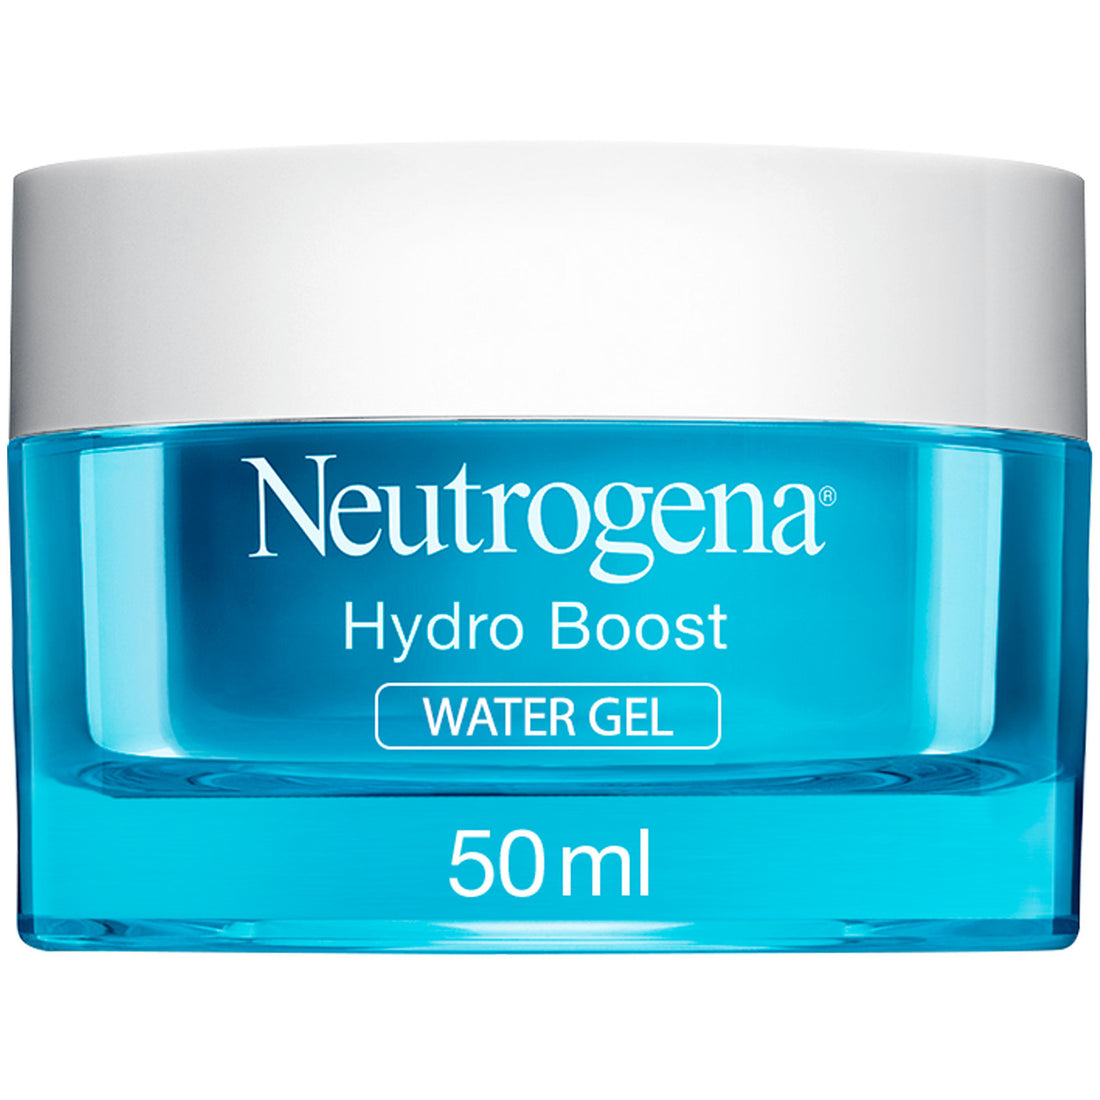 Neutrogena, Moisturizer Water Gel, Hydro Boost, Normal to Combination skin, 50ml